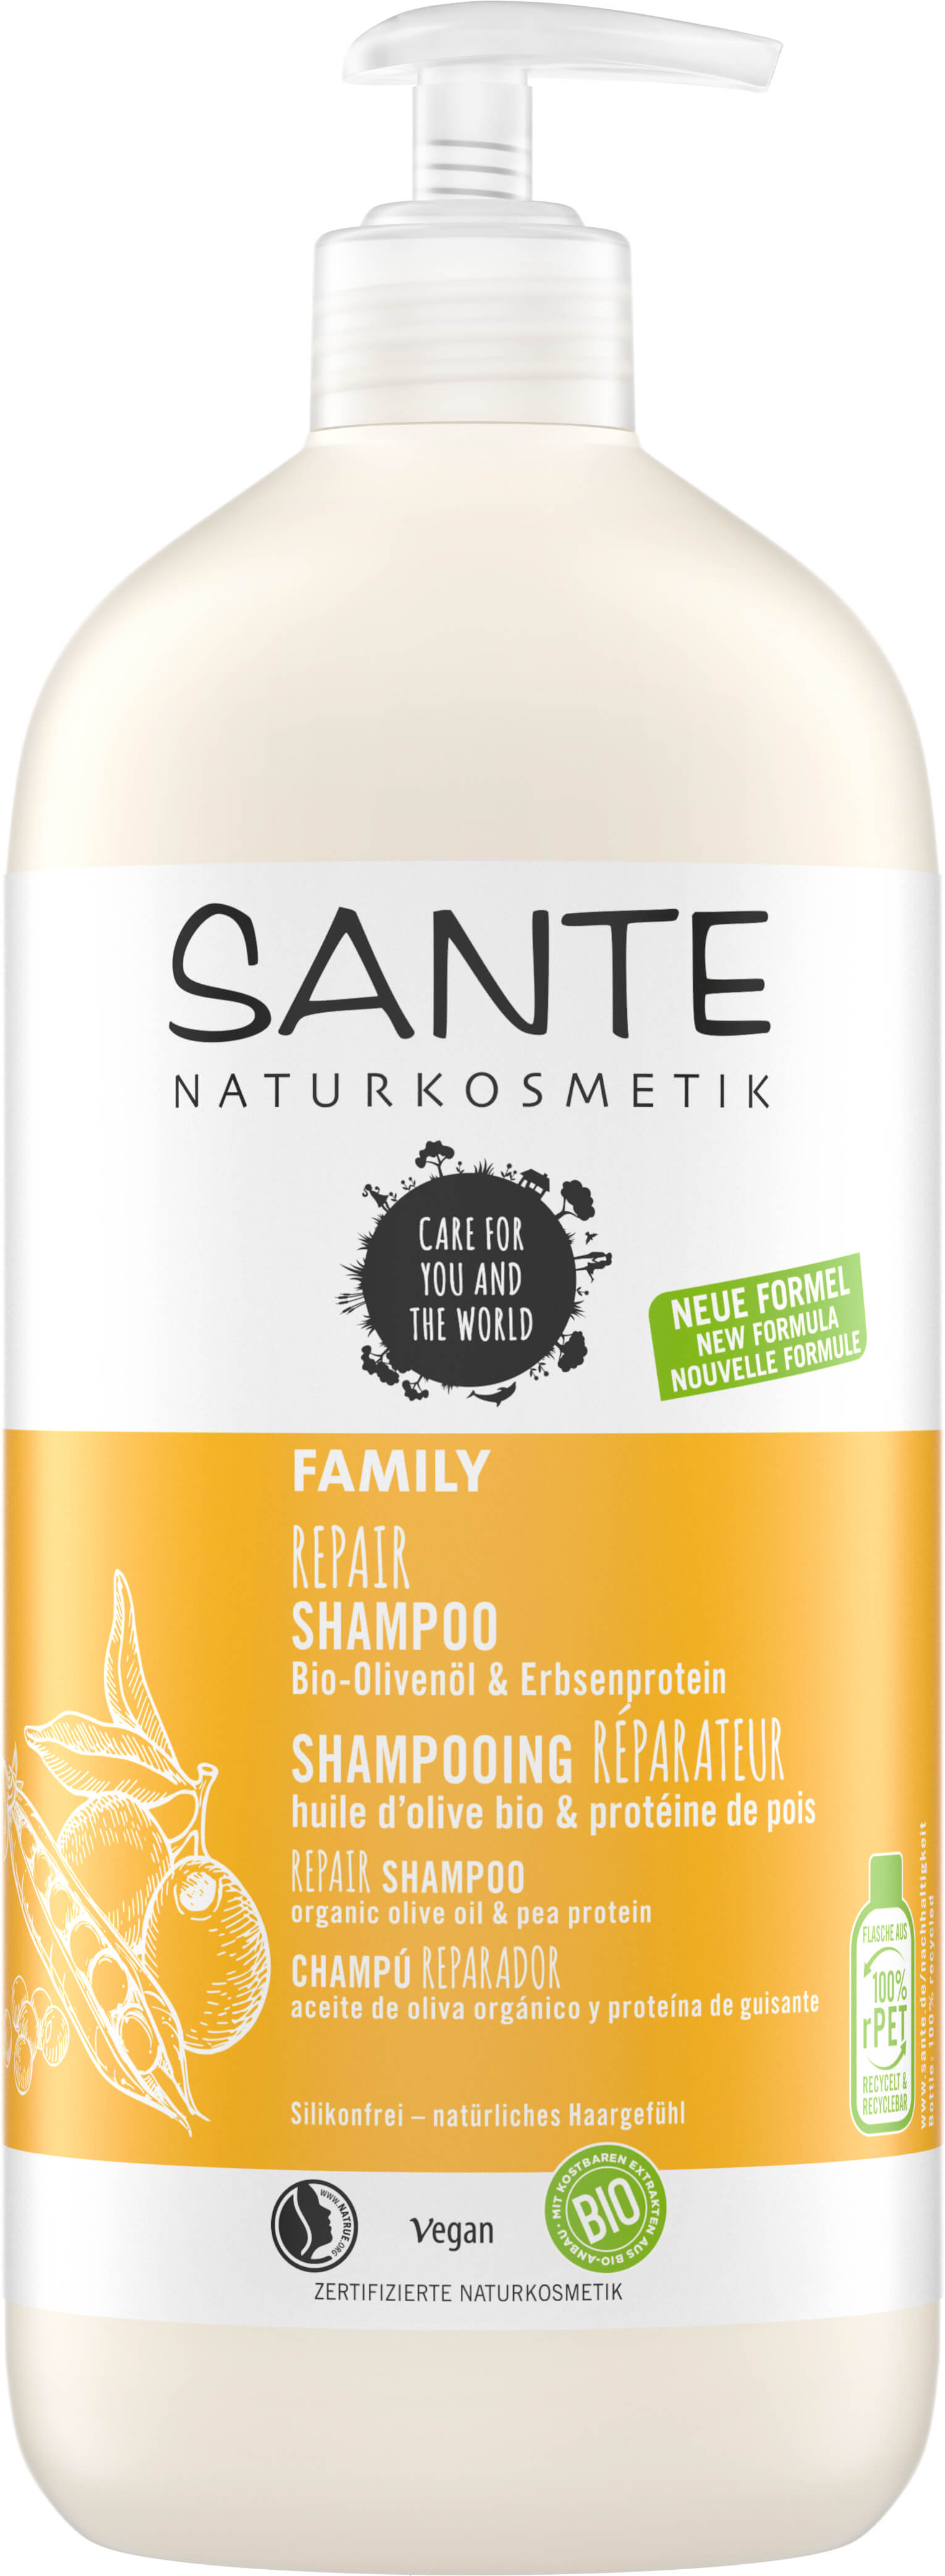 Repair Shampoo Erbsenprotein | Bio-Olivenöl SANTE & Naturkosmetik